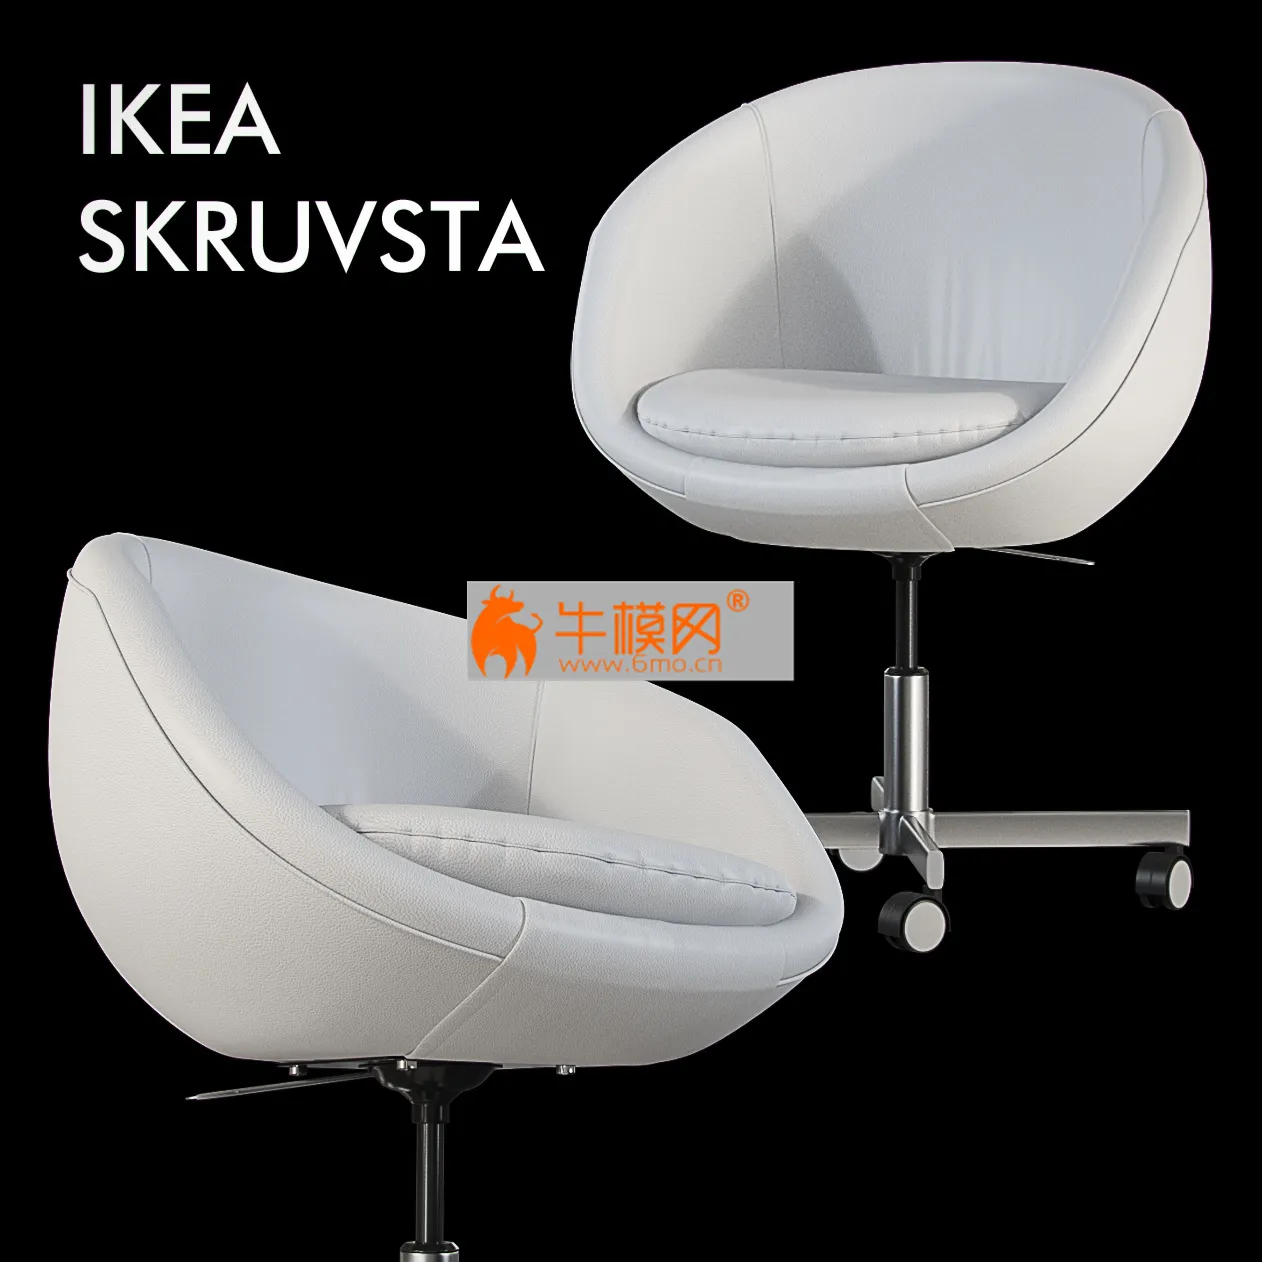 Ikea Skruvsta – 2011